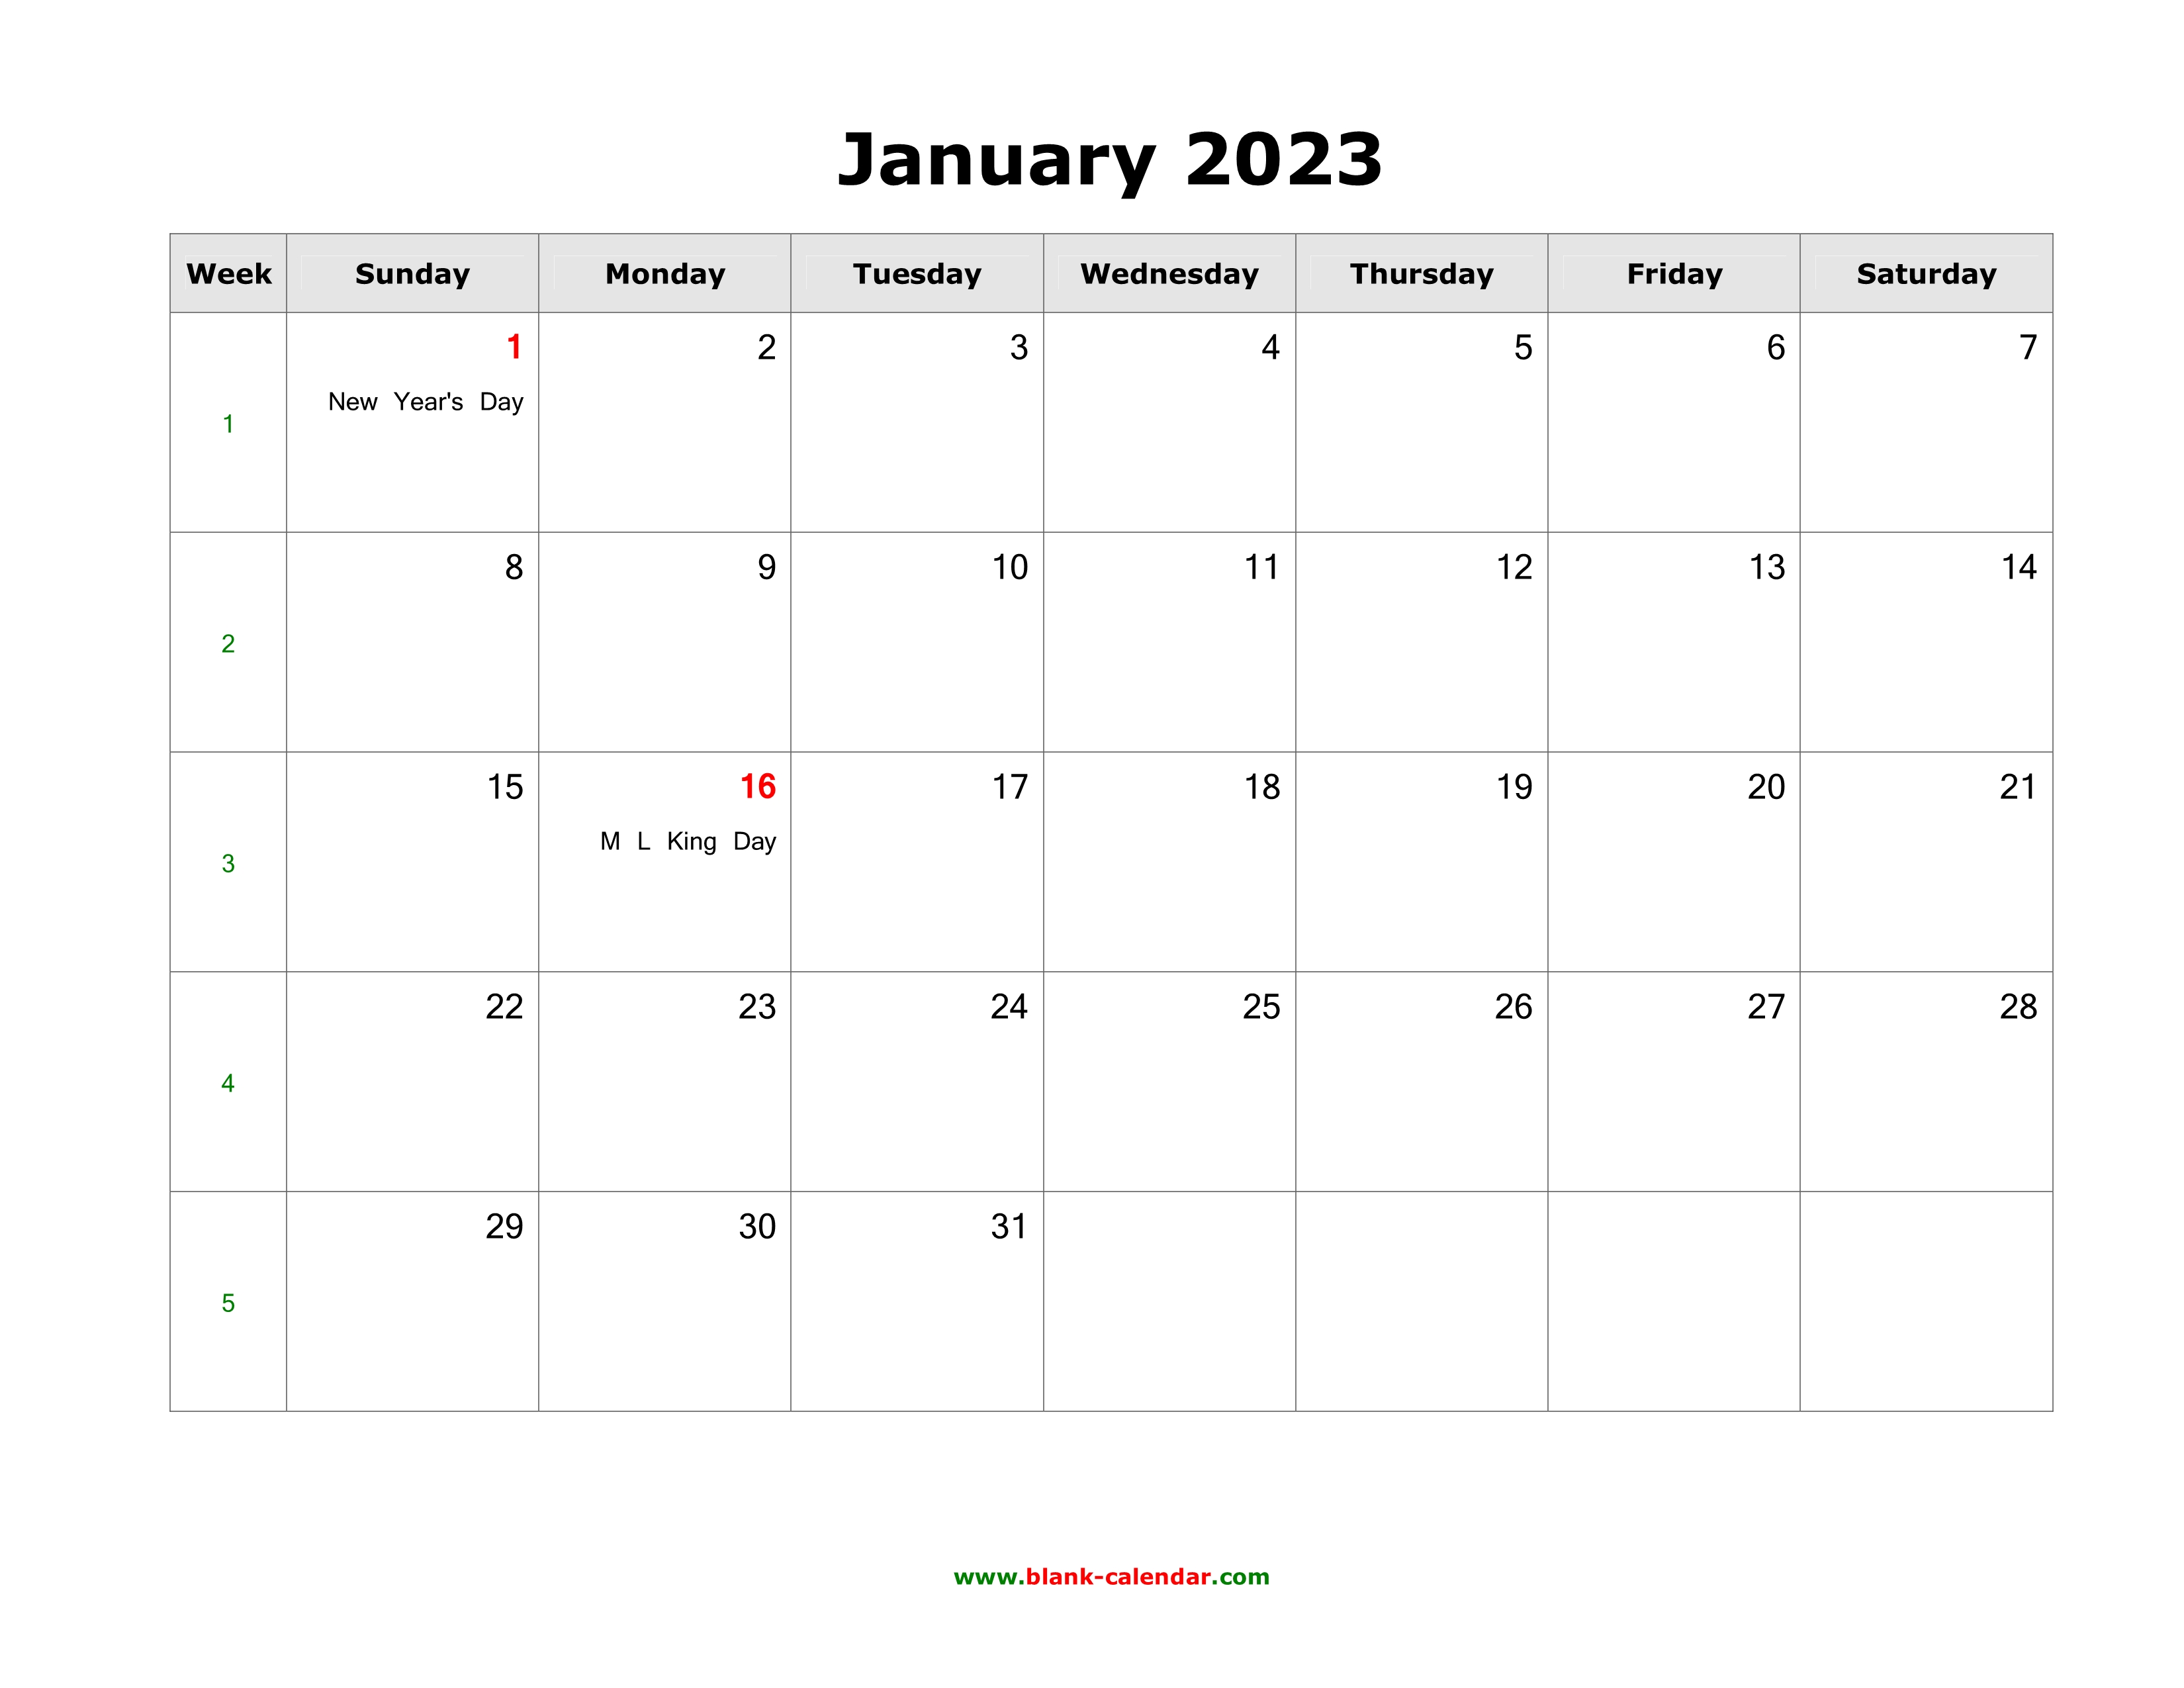 Download January 2023 Blank Calendar with US Holidays (horizontal)